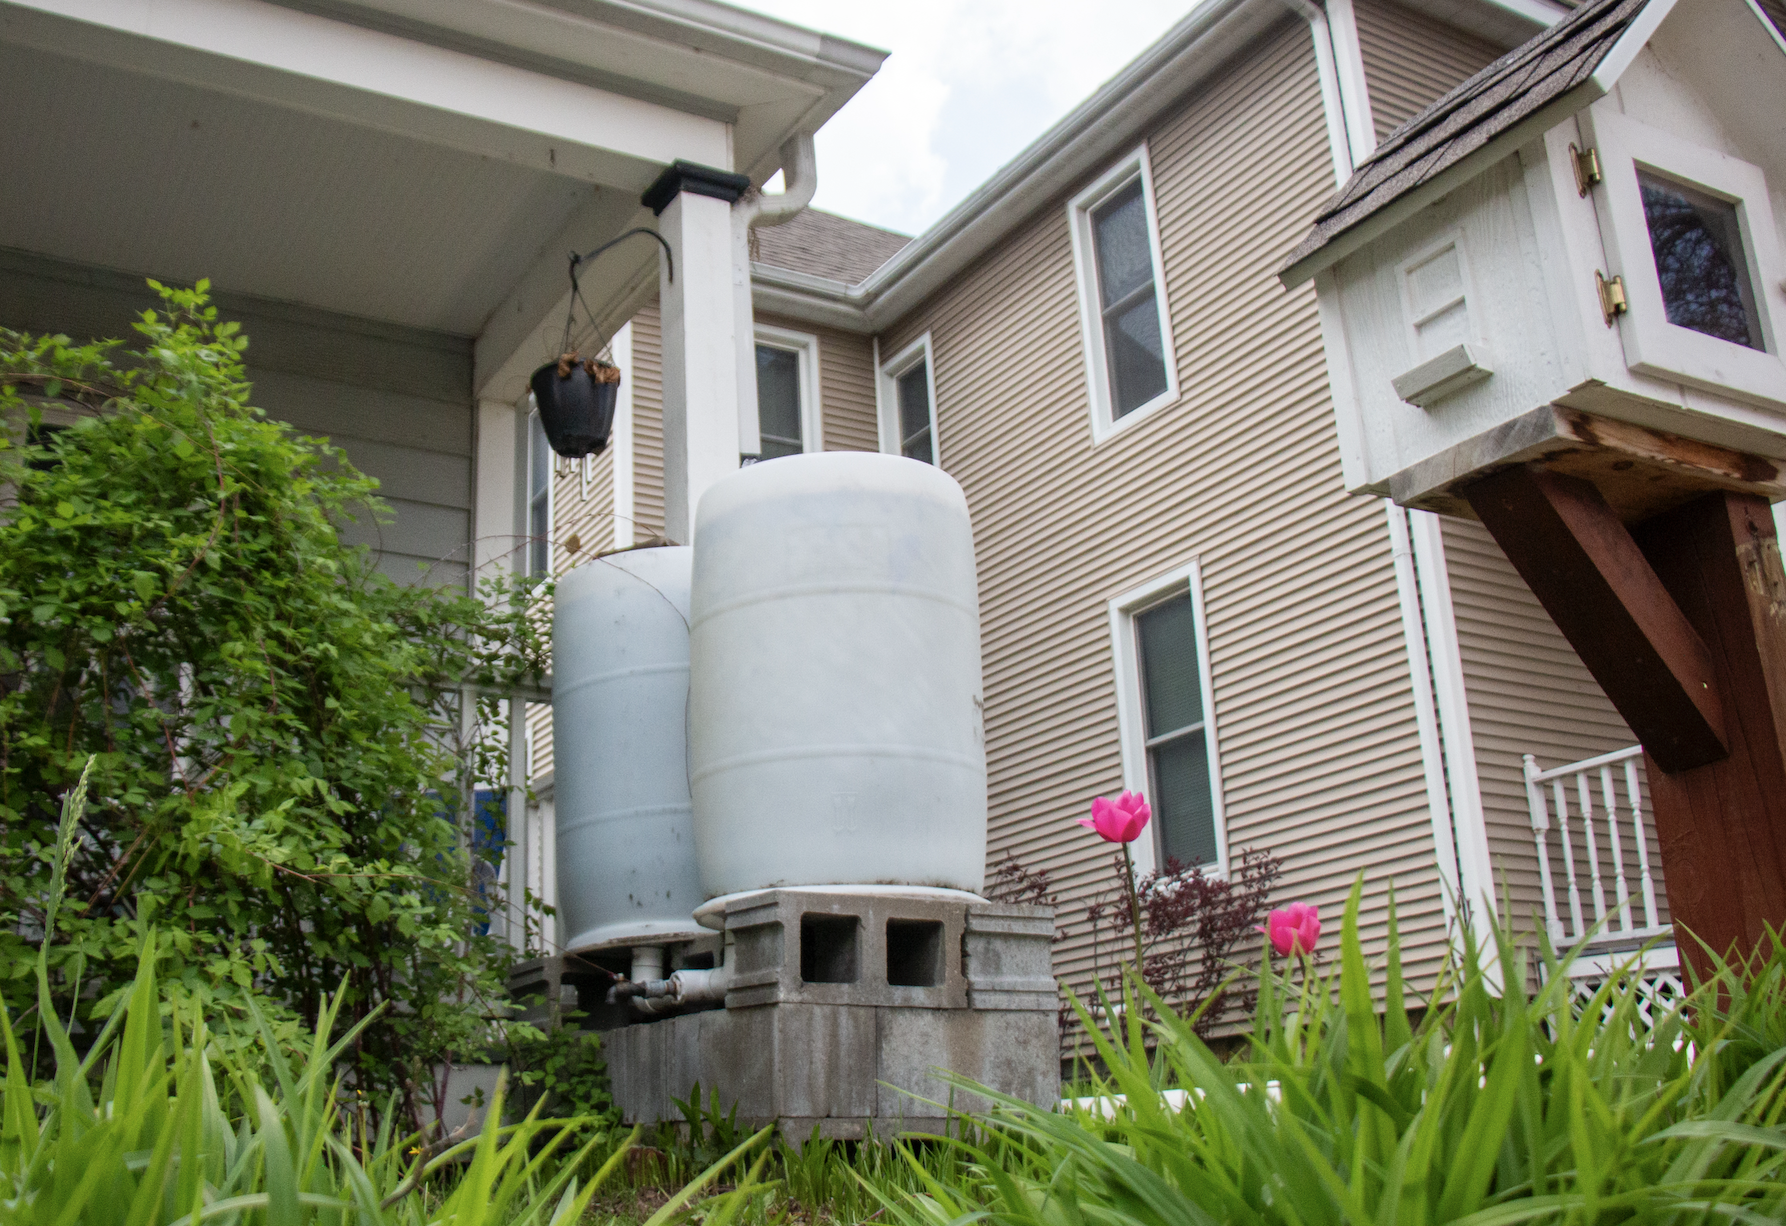 water barrels outside a house